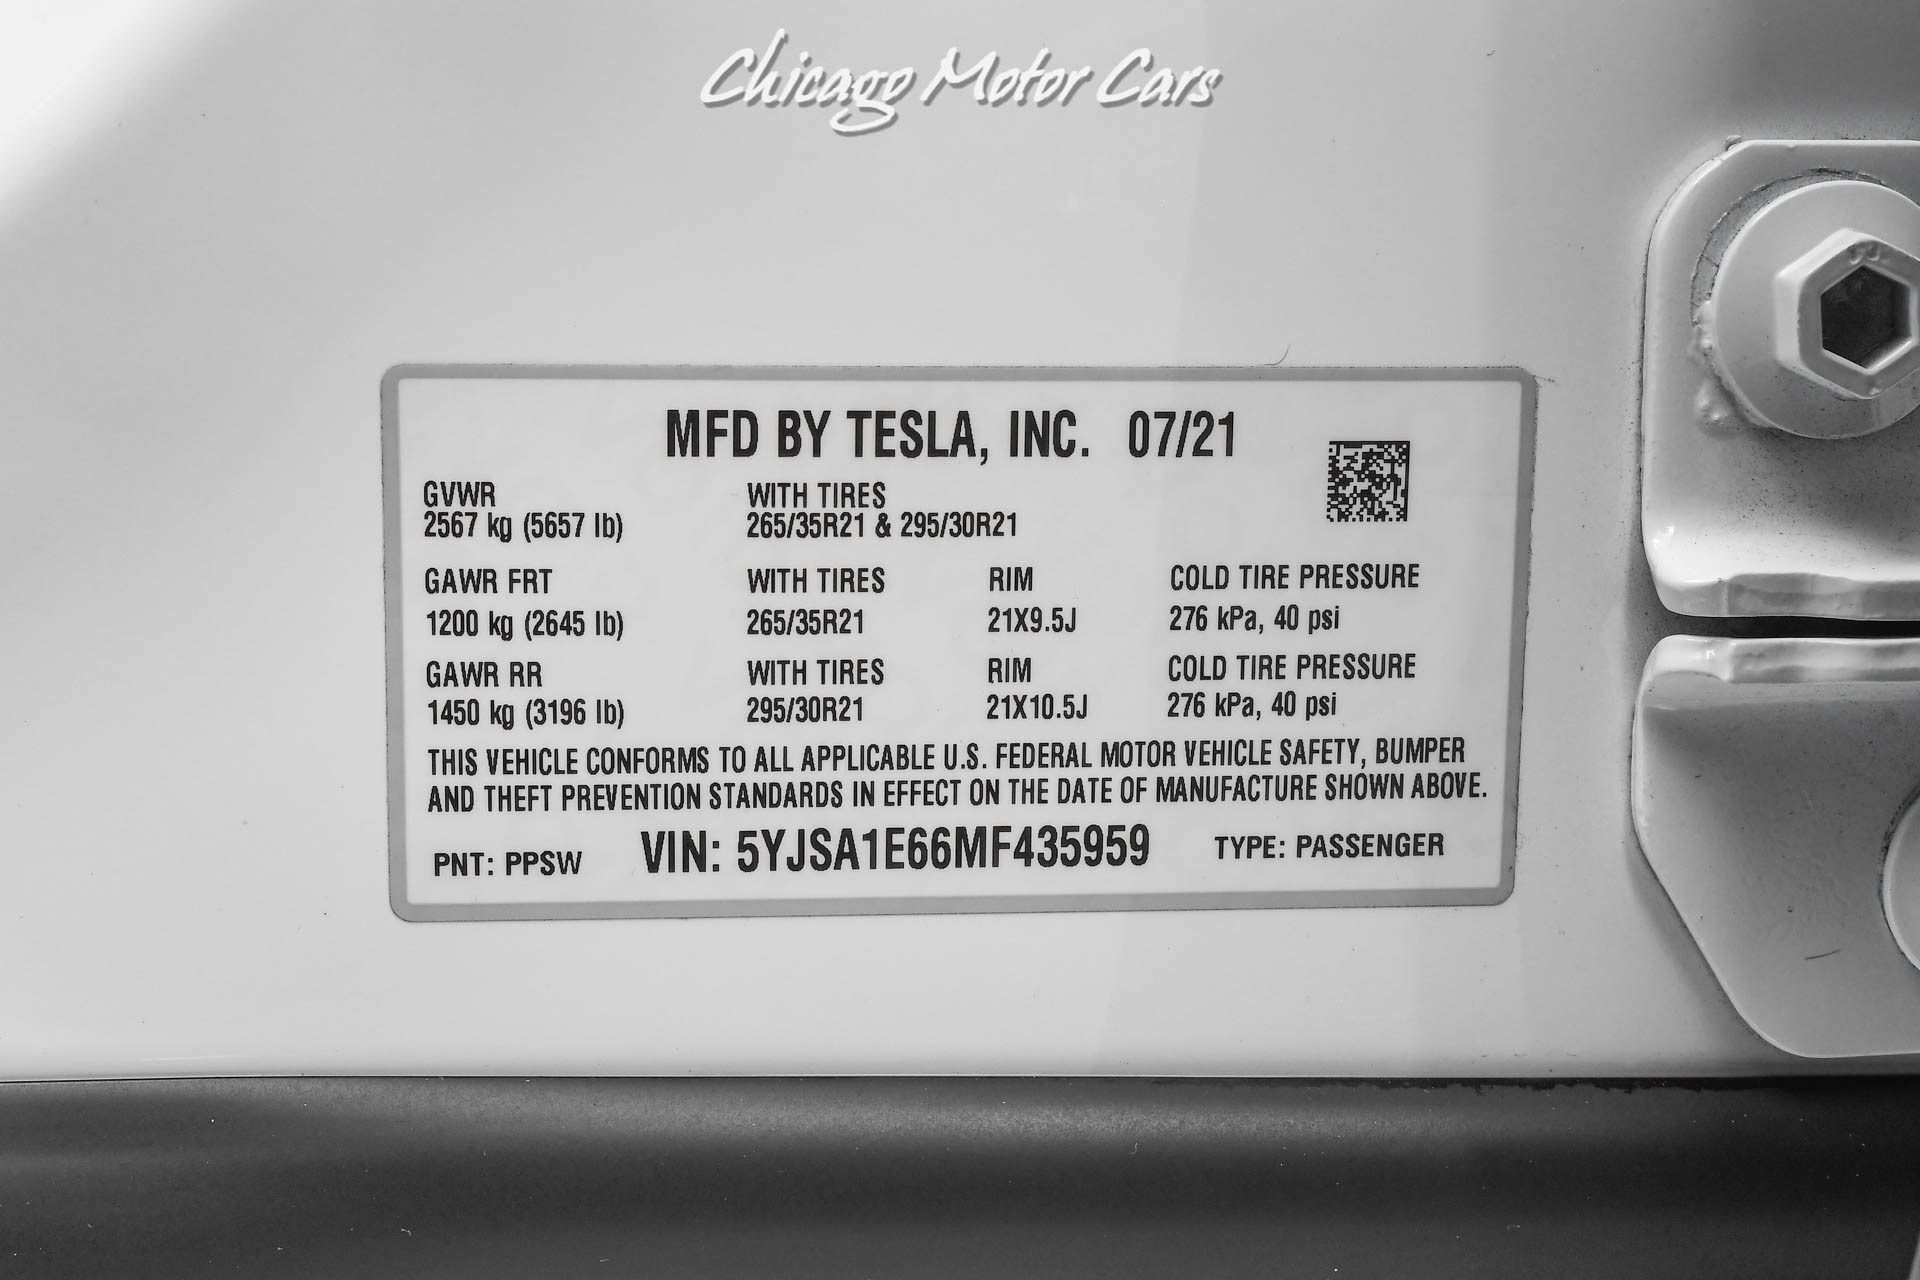 Used-2021-Tesla-Model-S-Plaid-Sedan-Pearl-White-Full-Self-Driving-ONLY-3K-Miles-0-60-in-199-sec